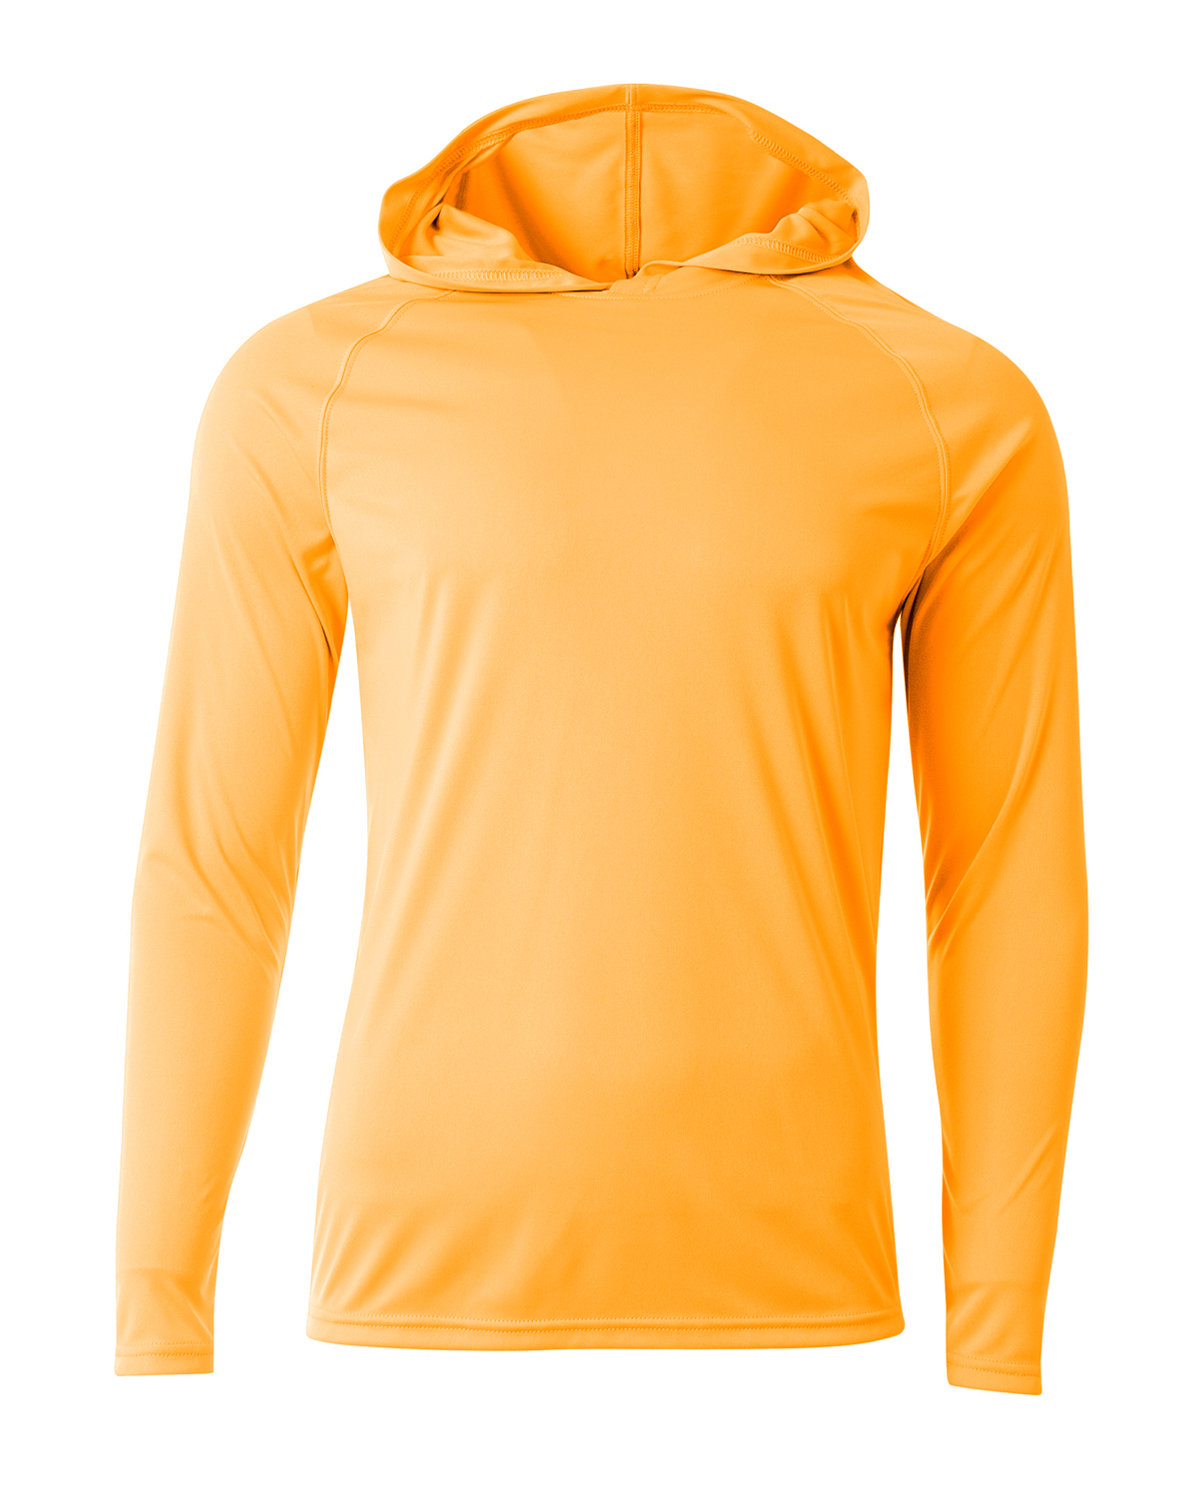 A4 Men's Cooling Performance Long-Sleeve Hooded T-shirt | alphabroder